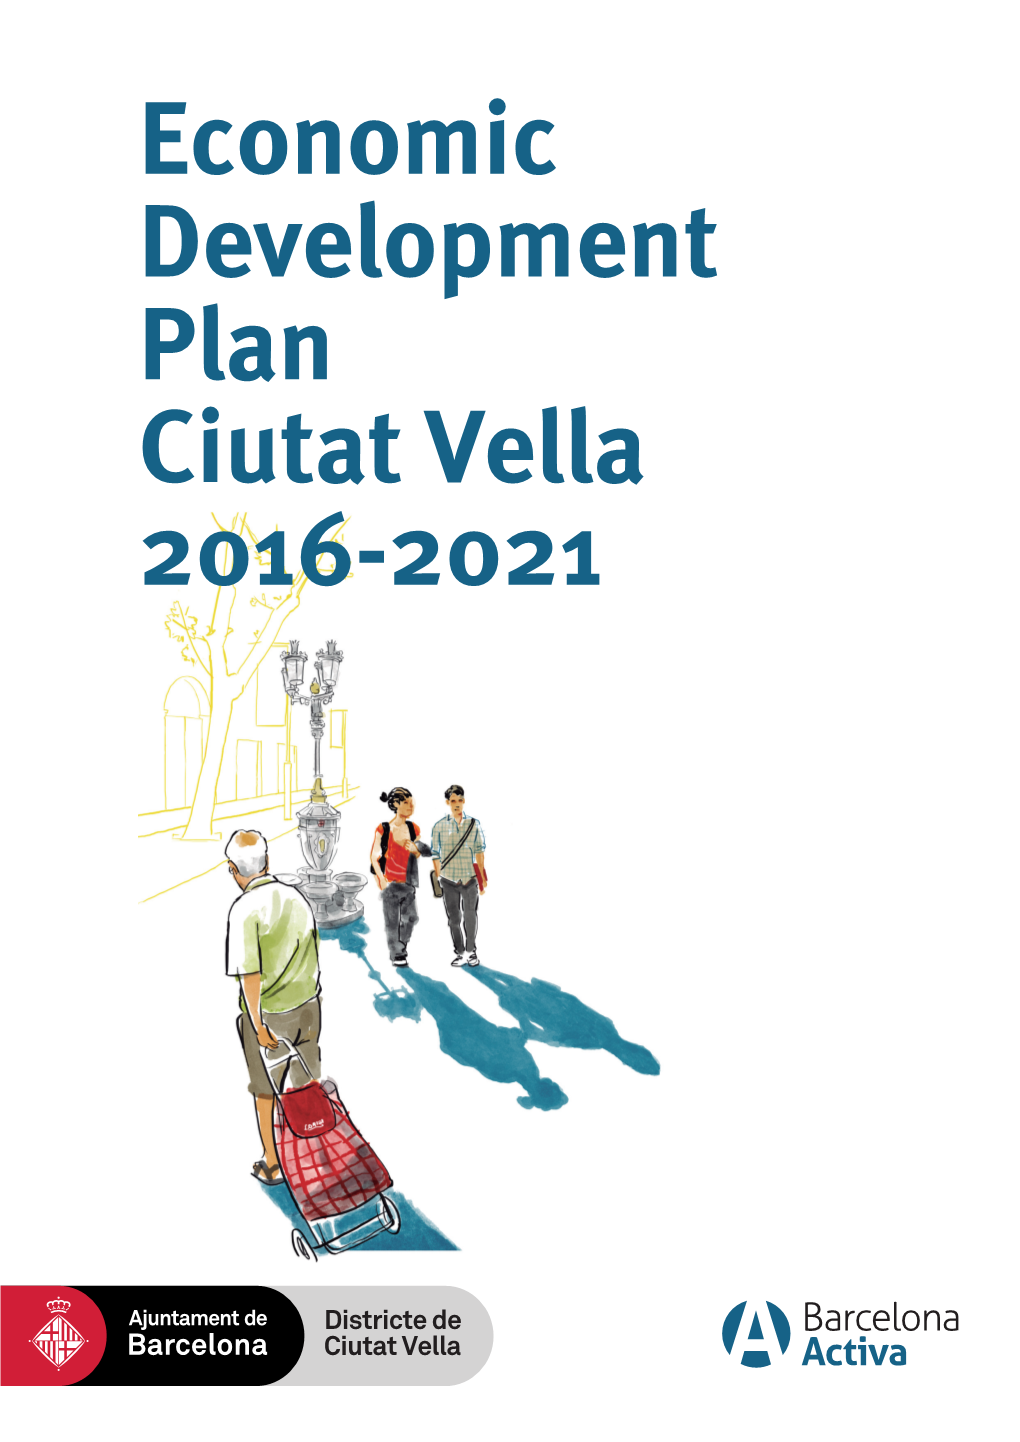 Economic Development Plan Ciutat Vella 2016-2021